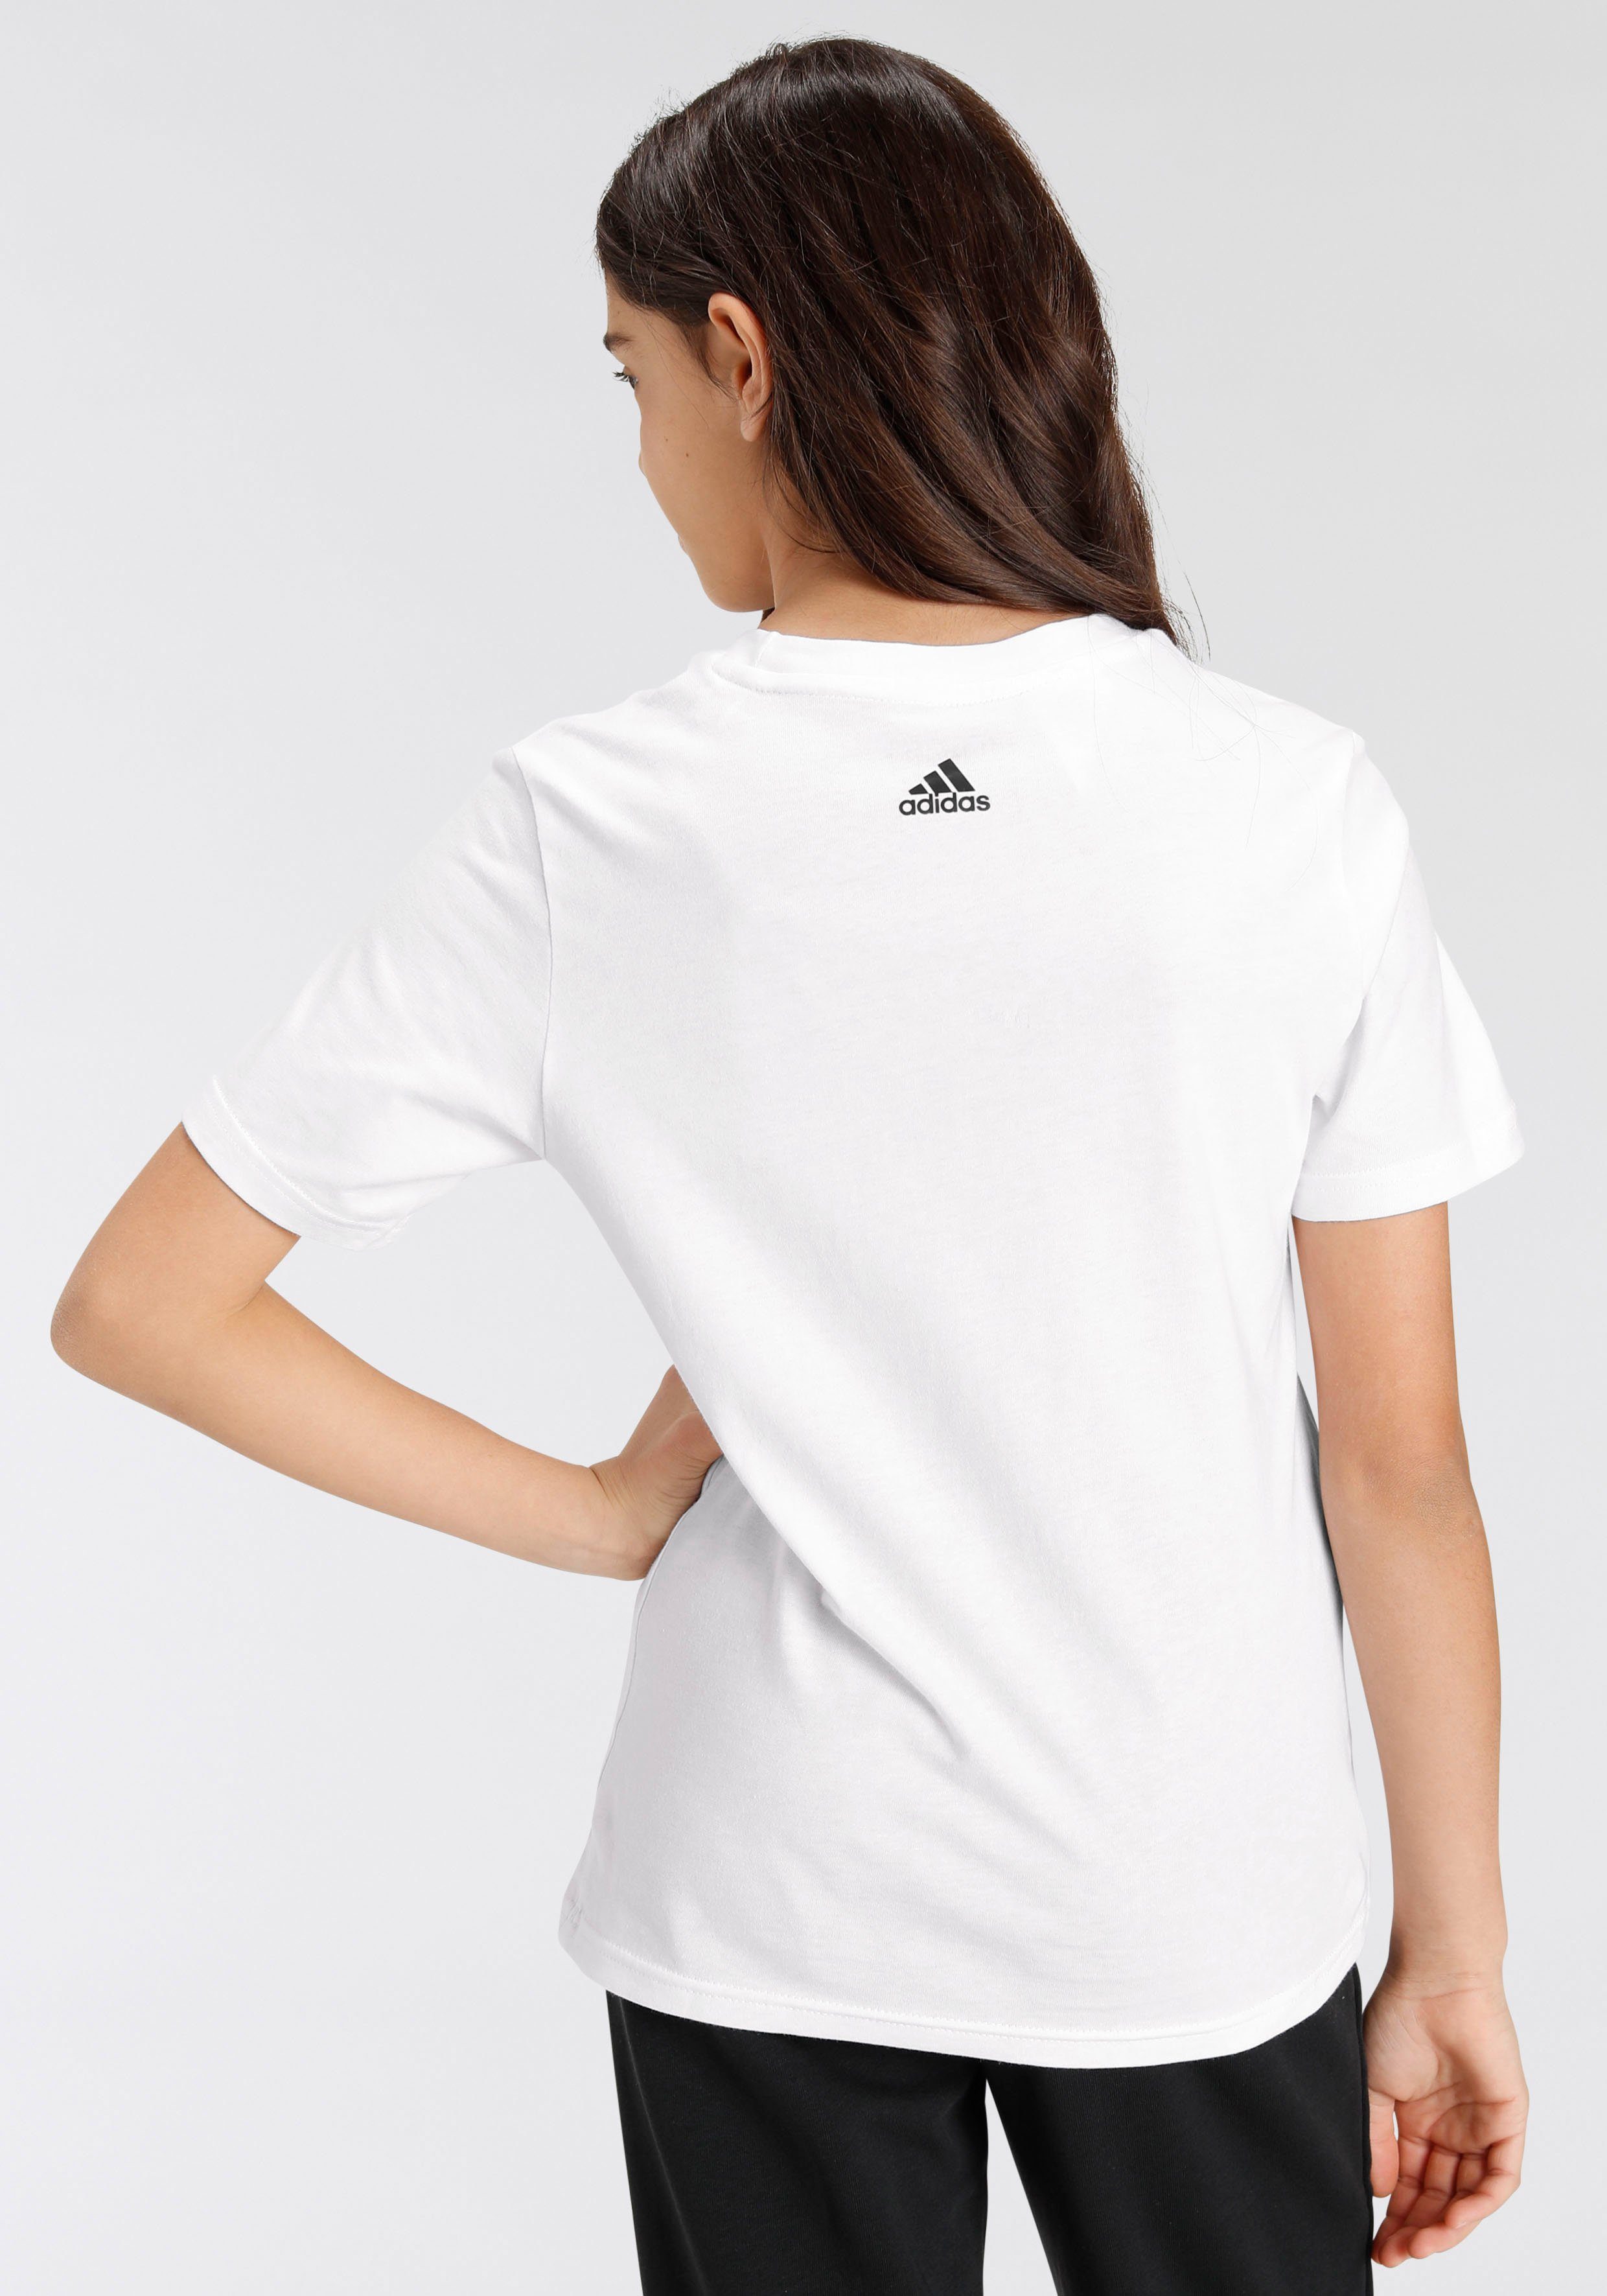 / COTTON Black T-Shirt LINEAR LOGO adidas White Sportswear ESSENTIALS